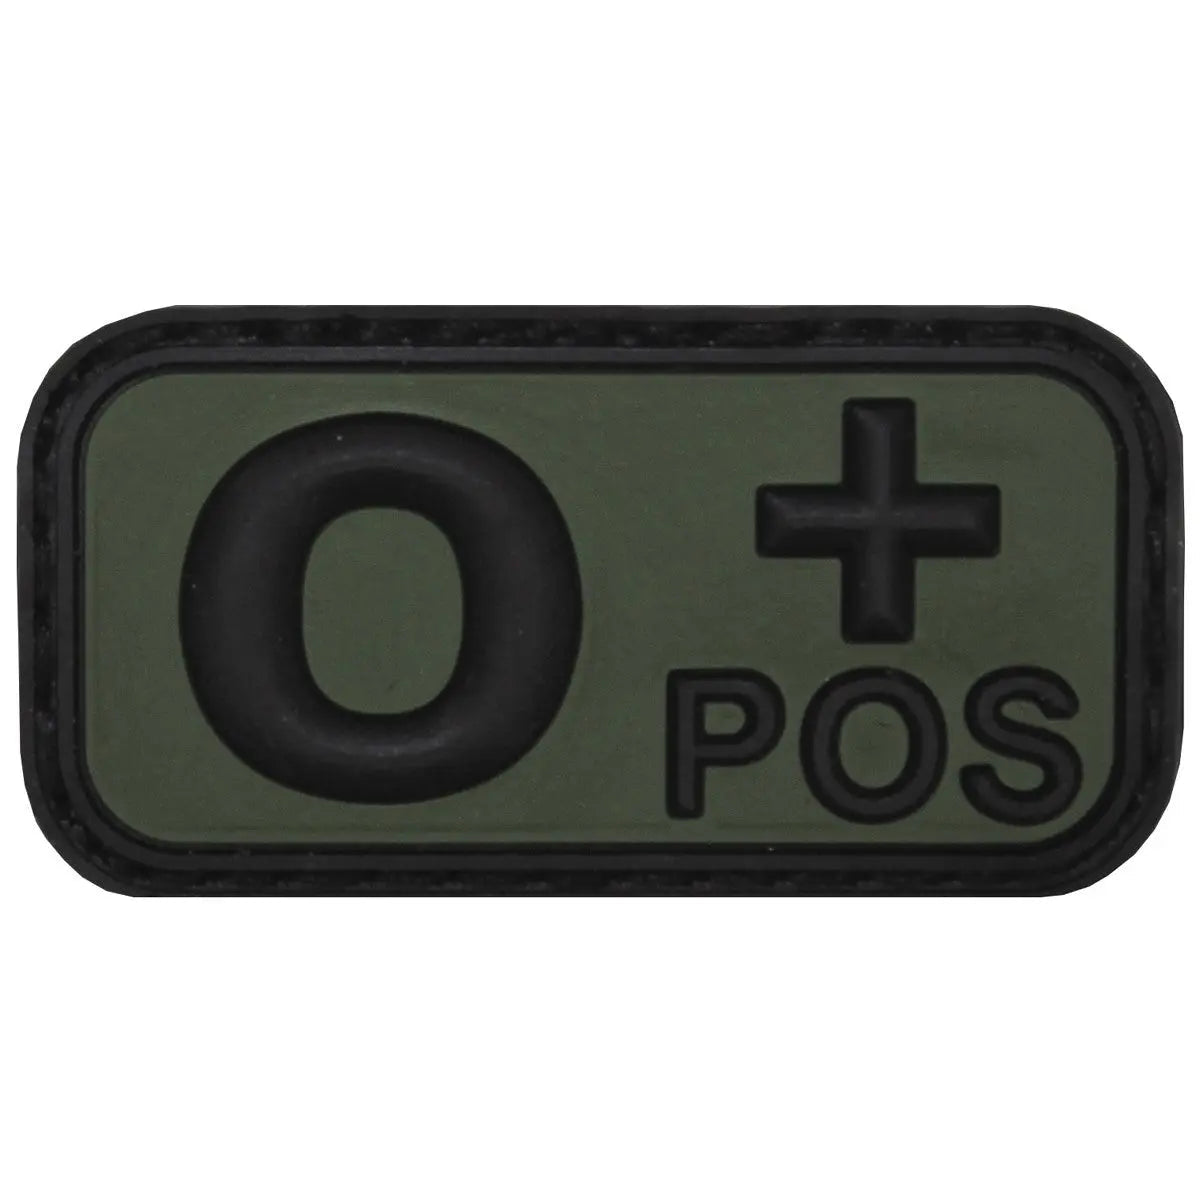 Velcro Patch, black-OD green, blood group "O POS", 3D